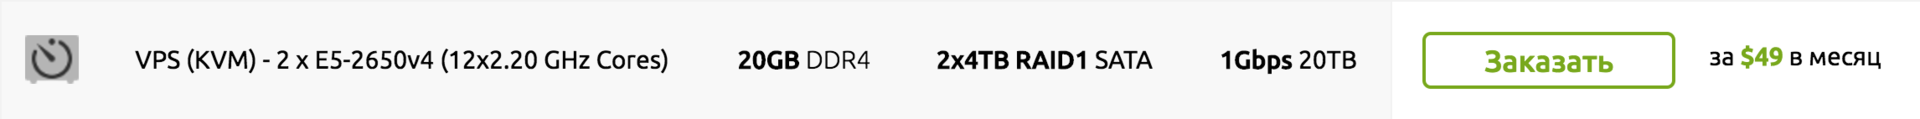 Чёрные серверы в Нидерландах с чёрной пятницы (предзаказ): 6х2.20GHz 10GB DDR4 240GB SSD 1Gbps 10TB — $29 / месяц